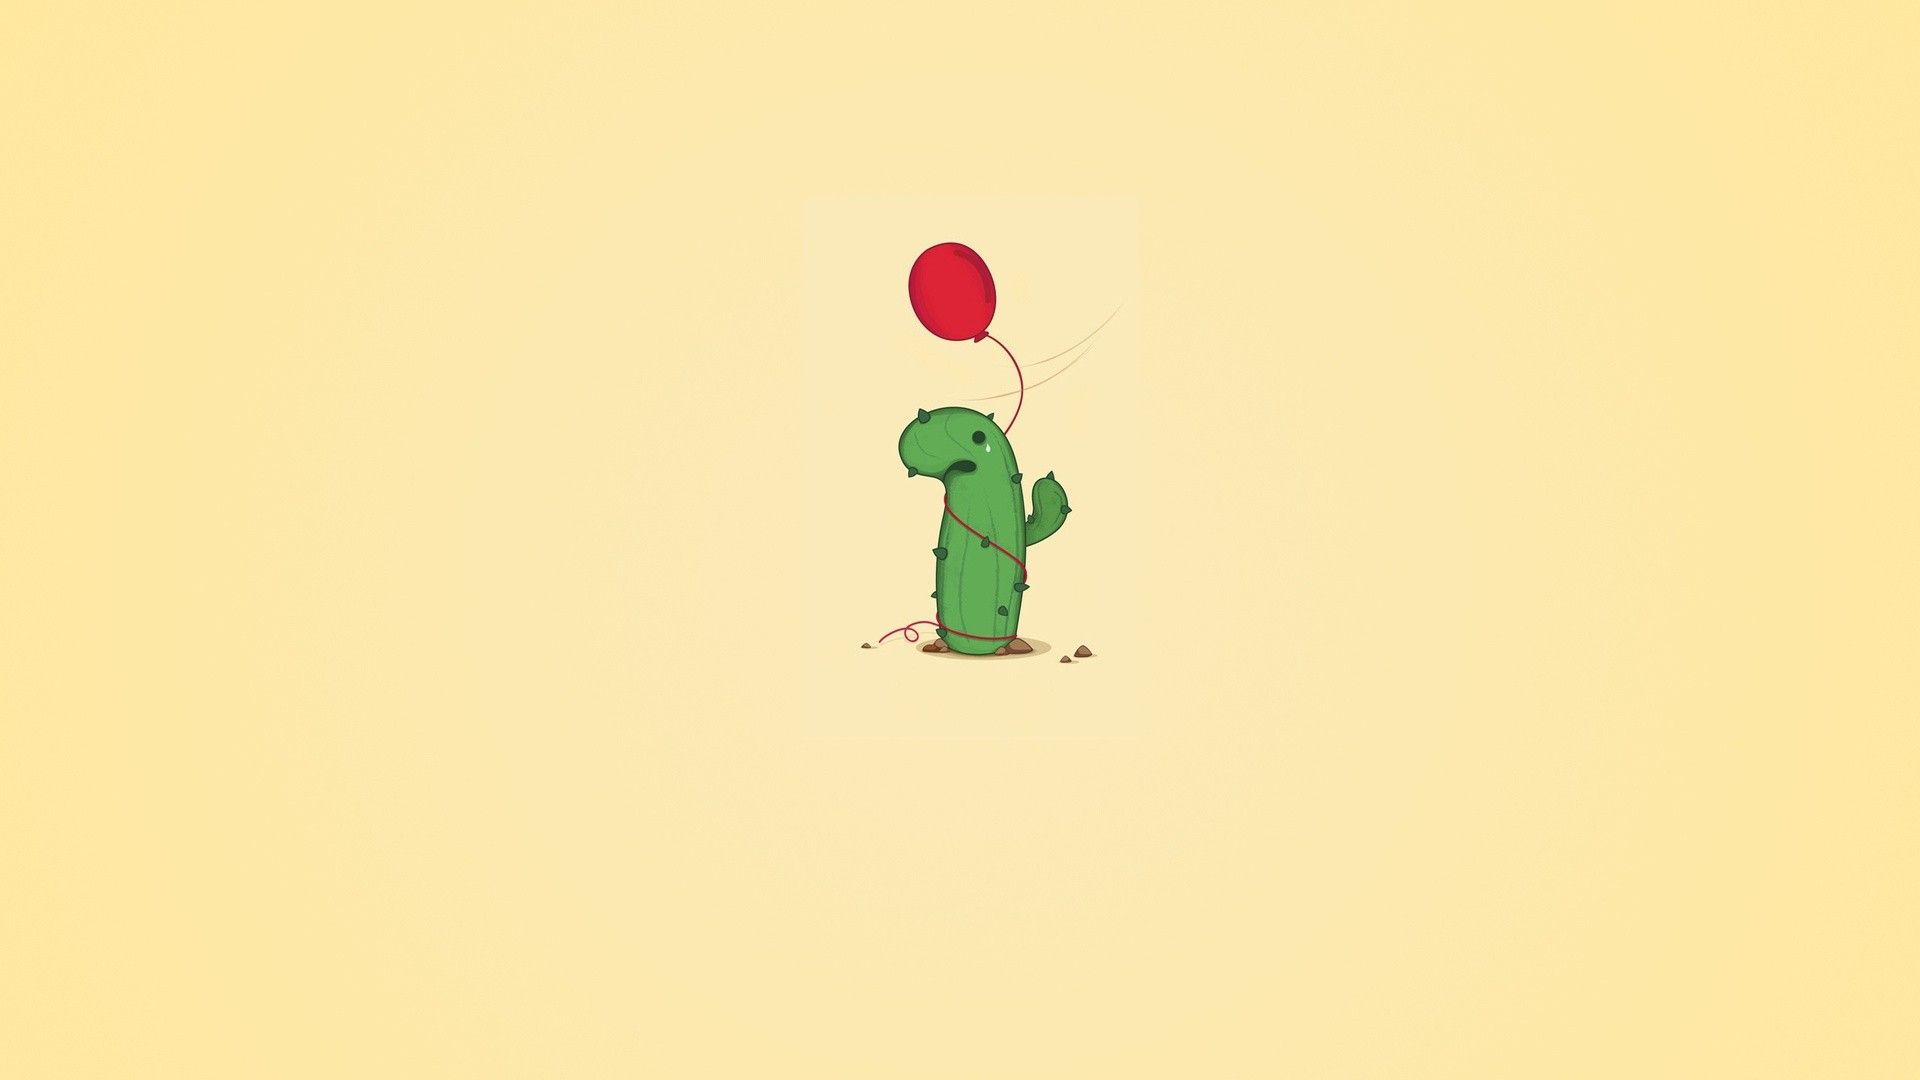 A cute cactus holding a red balloon - Cactus